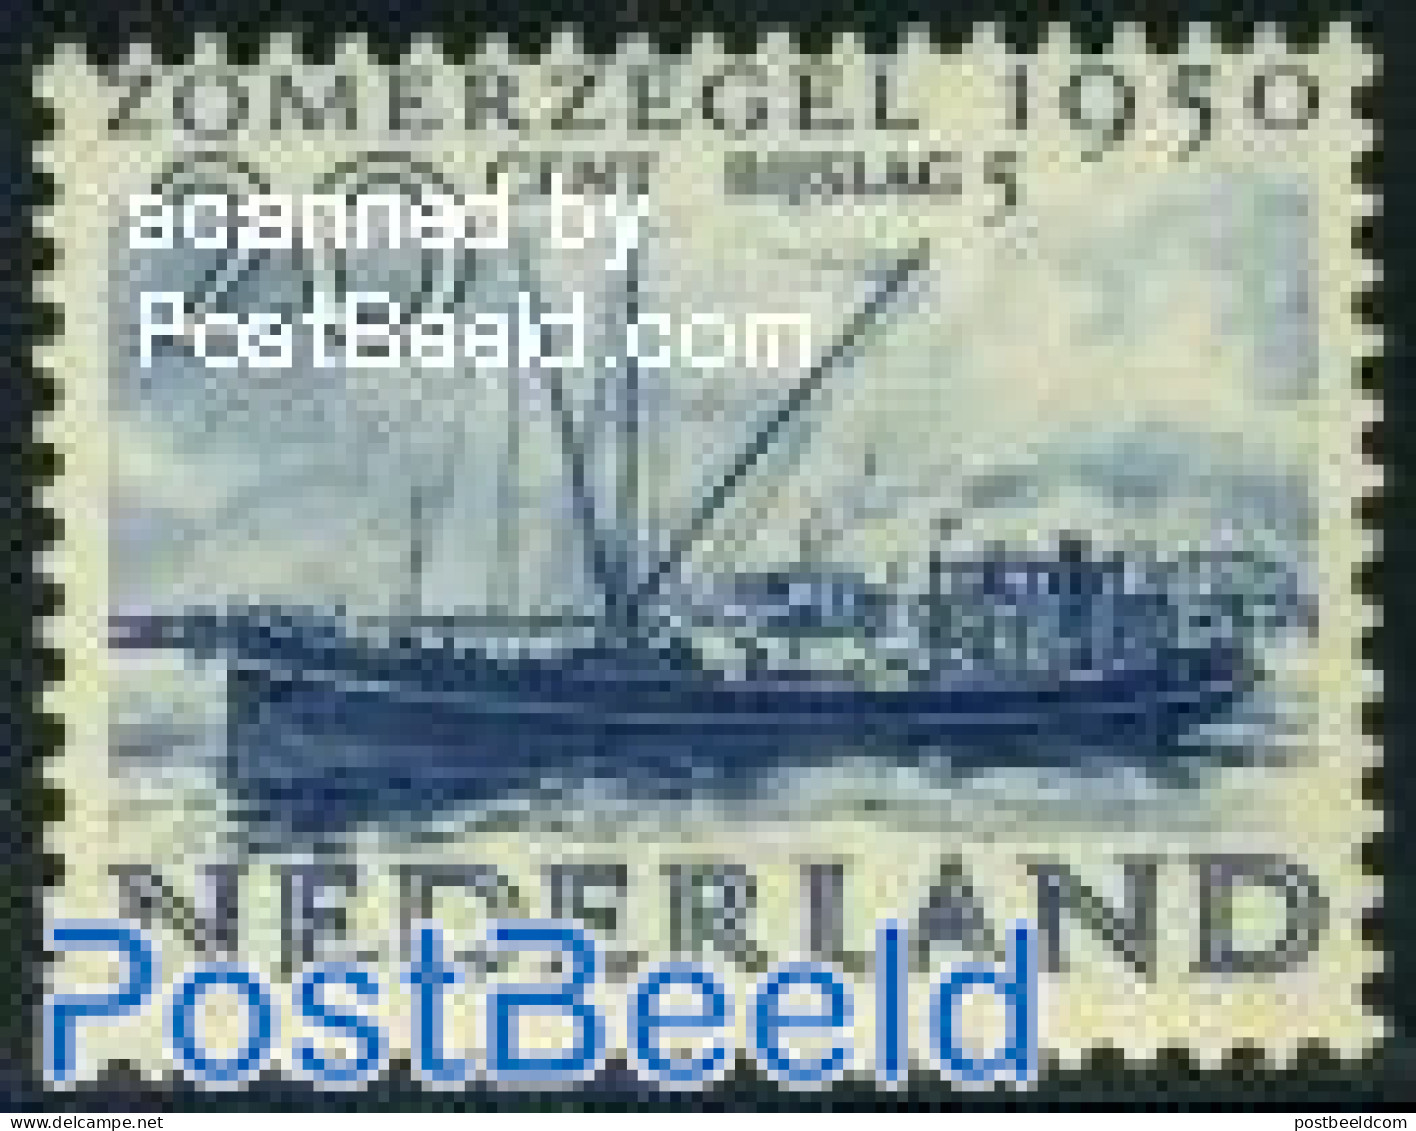 Netherlands 1950 20c, Motorship, Stamp Out Of Set, Mint NH, Transport - Ships And Boats - Ungebraucht